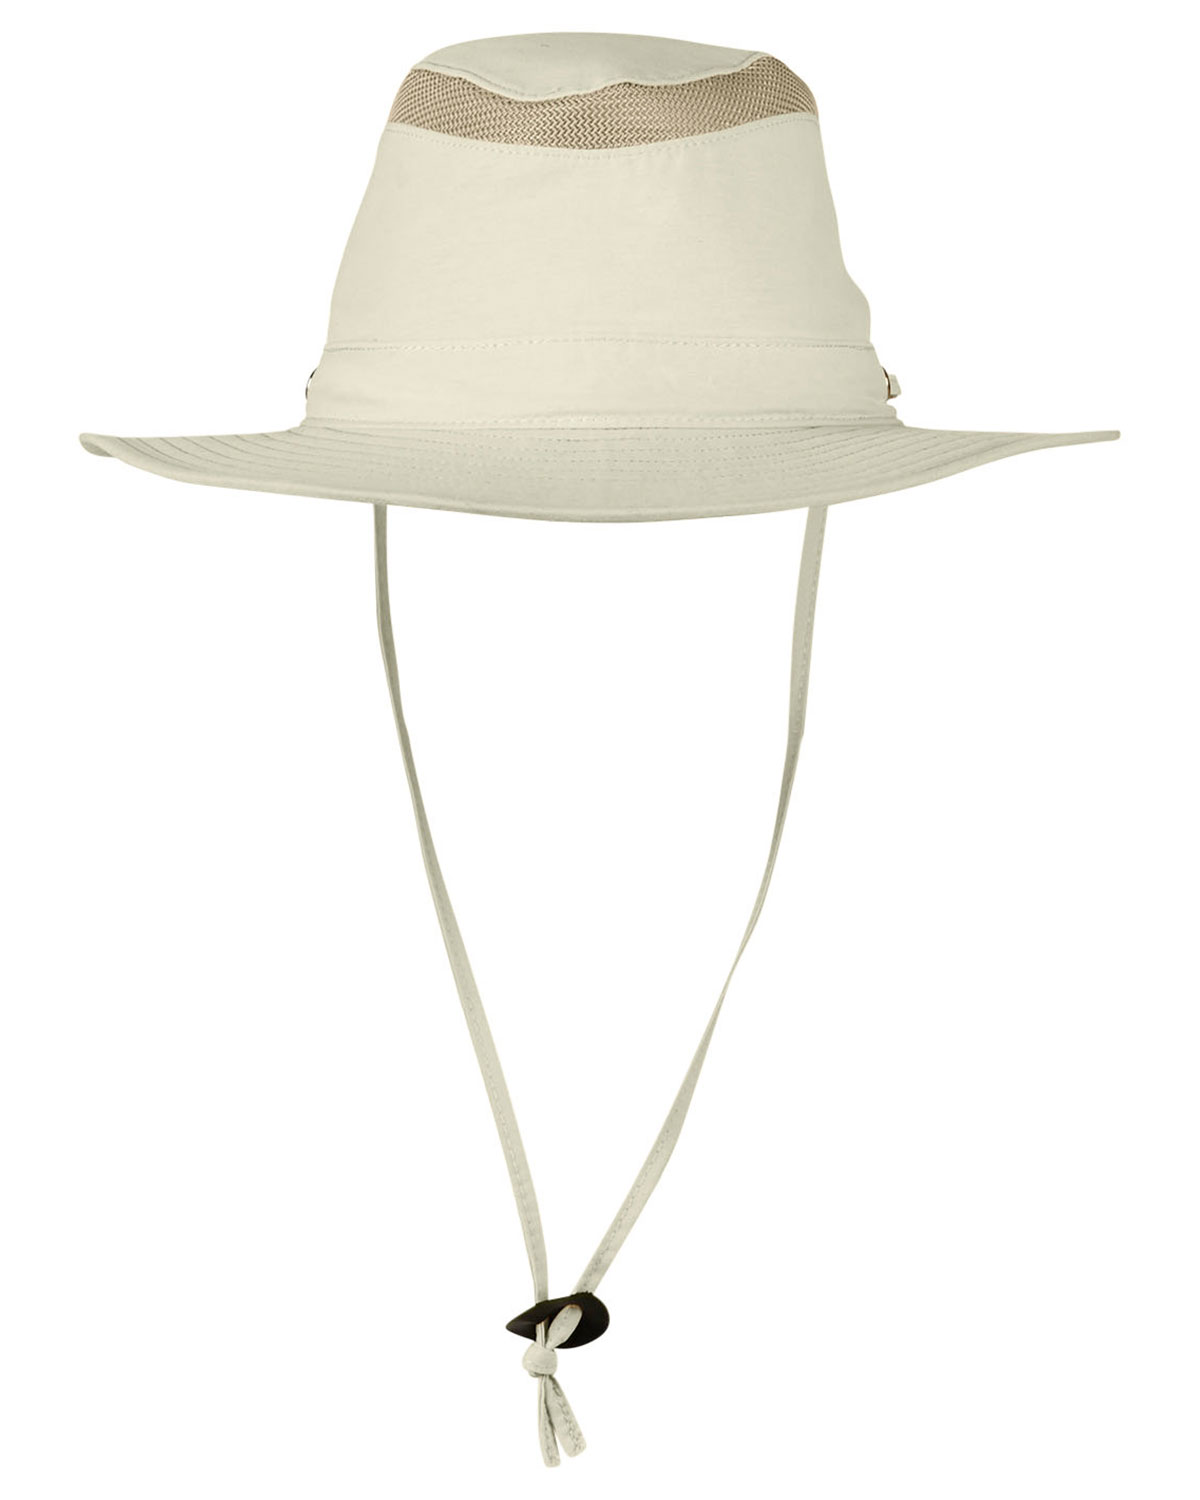 Adams OB101 Outback Brimmed Hat at Apparelstation